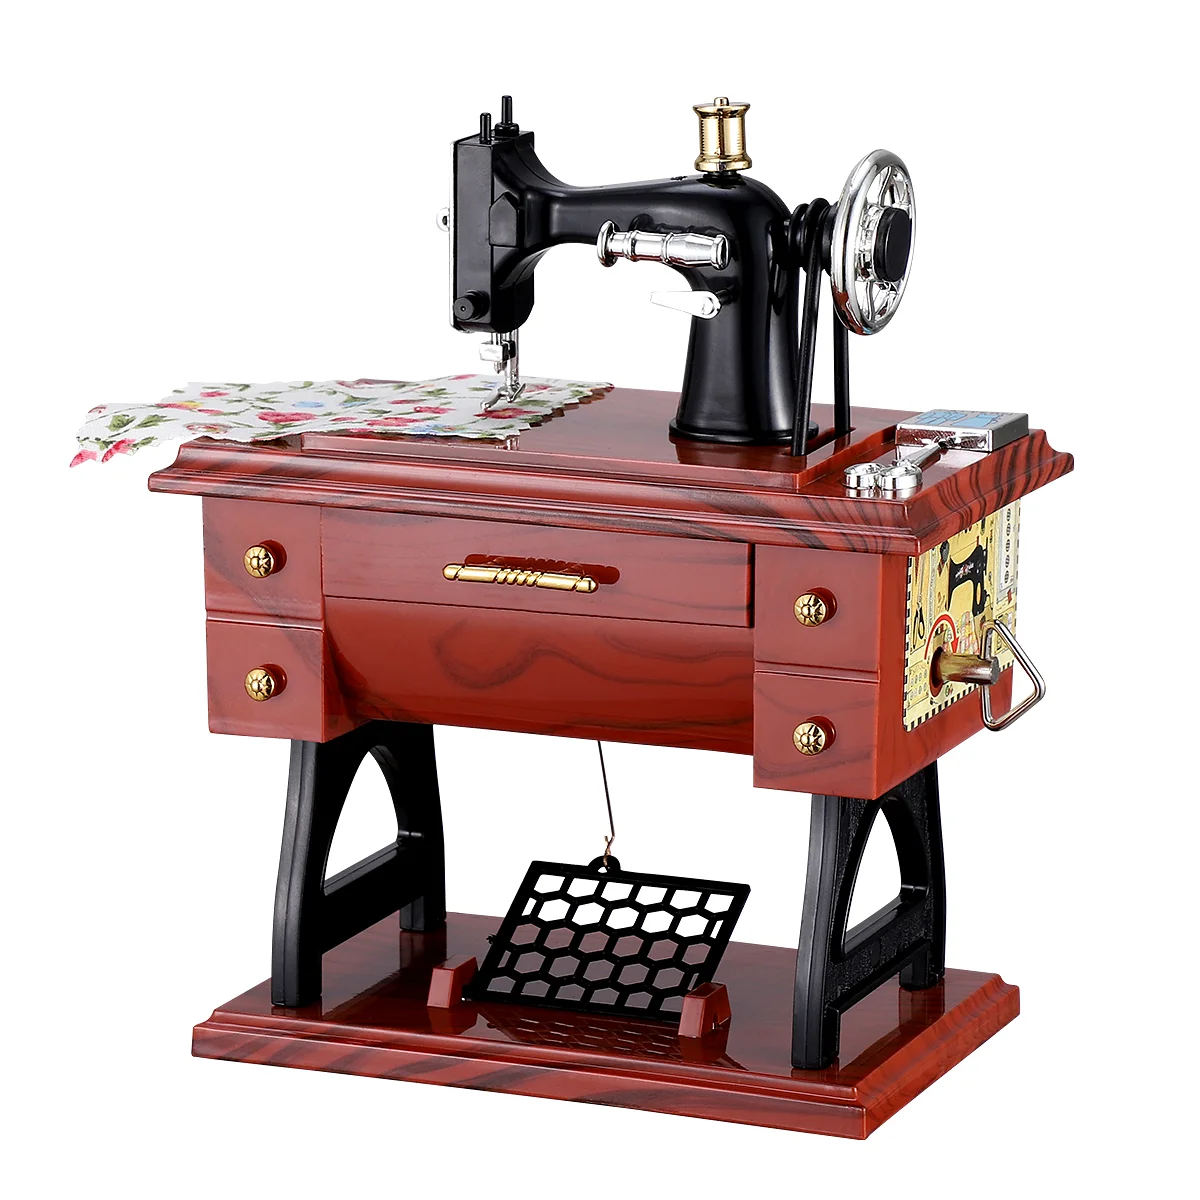 

VORCOOL Vintage Sewing Music Box Musical Toy Sewing Machine Music Sartorius Model Play Creative Gift